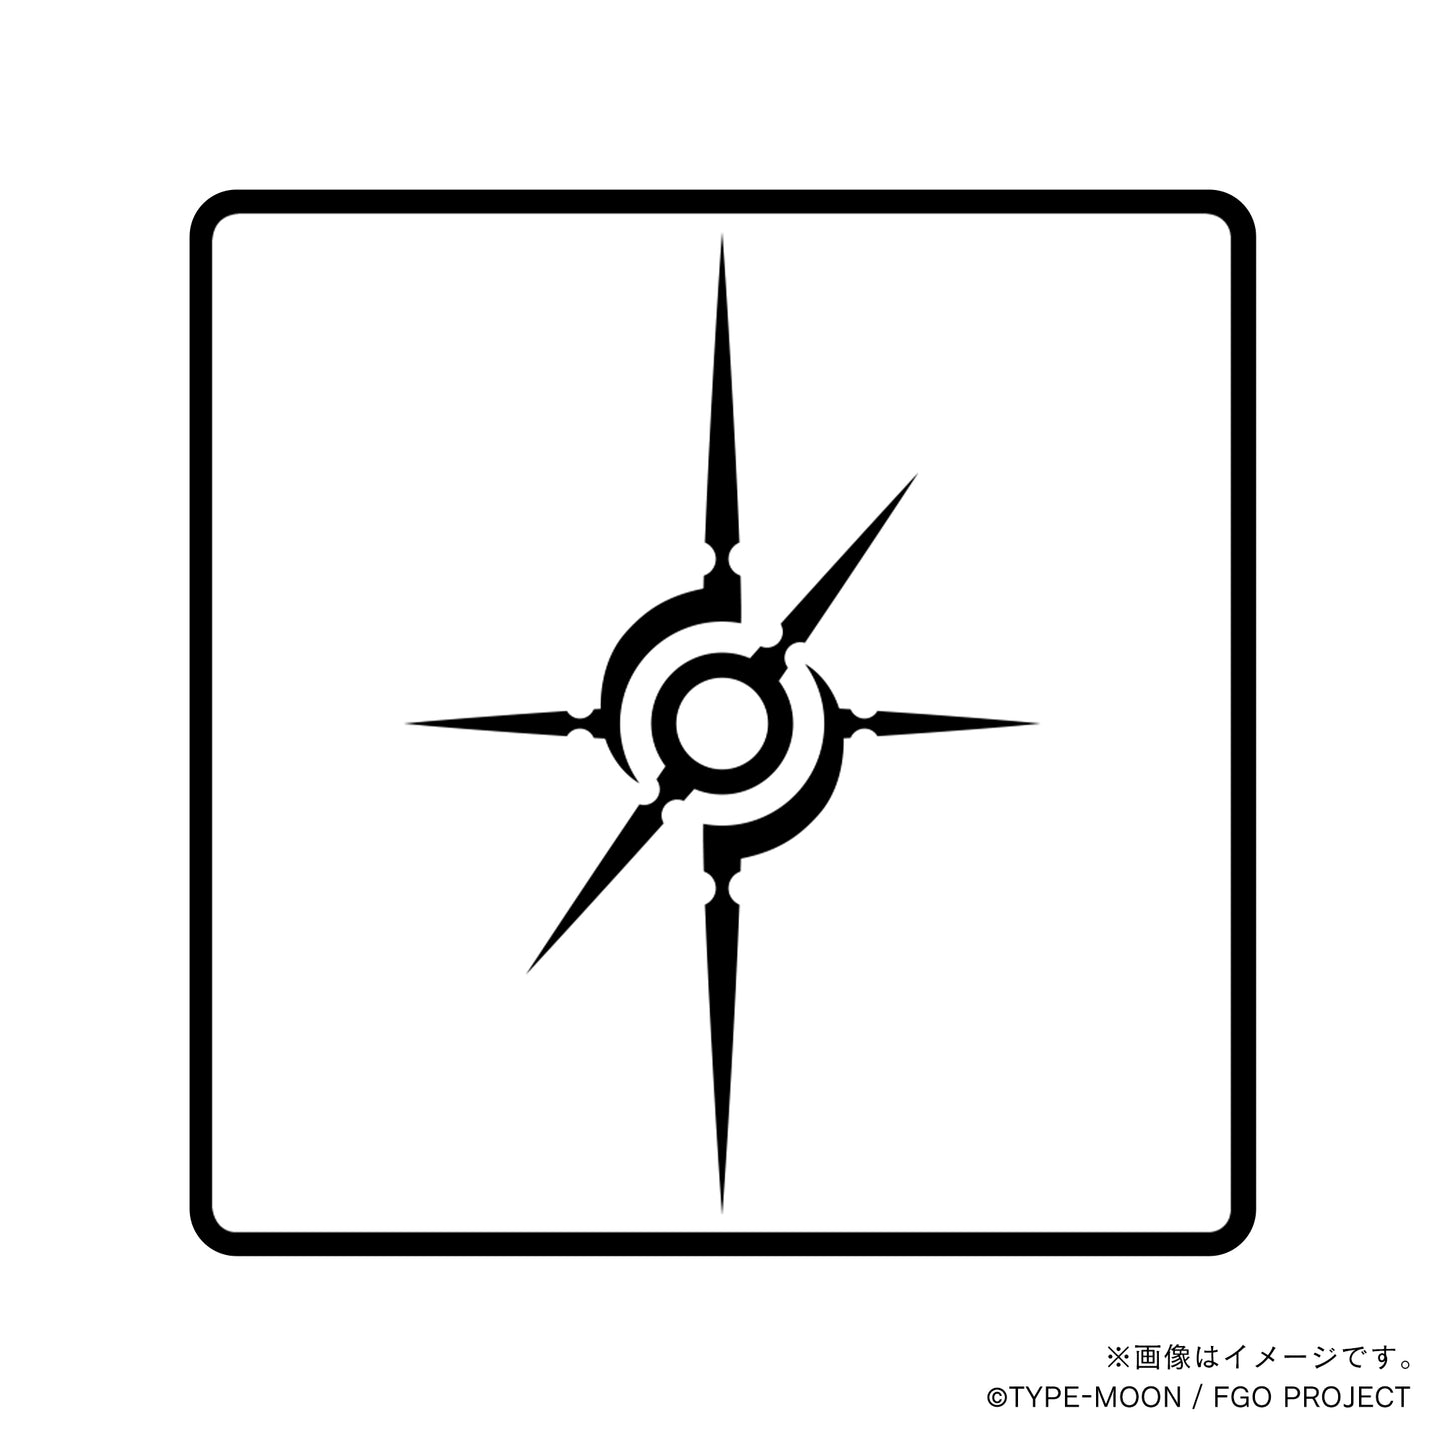 【Fate Grand Order】キリシュタリア・ヴォーダイム・丸印18mm&角印21mm